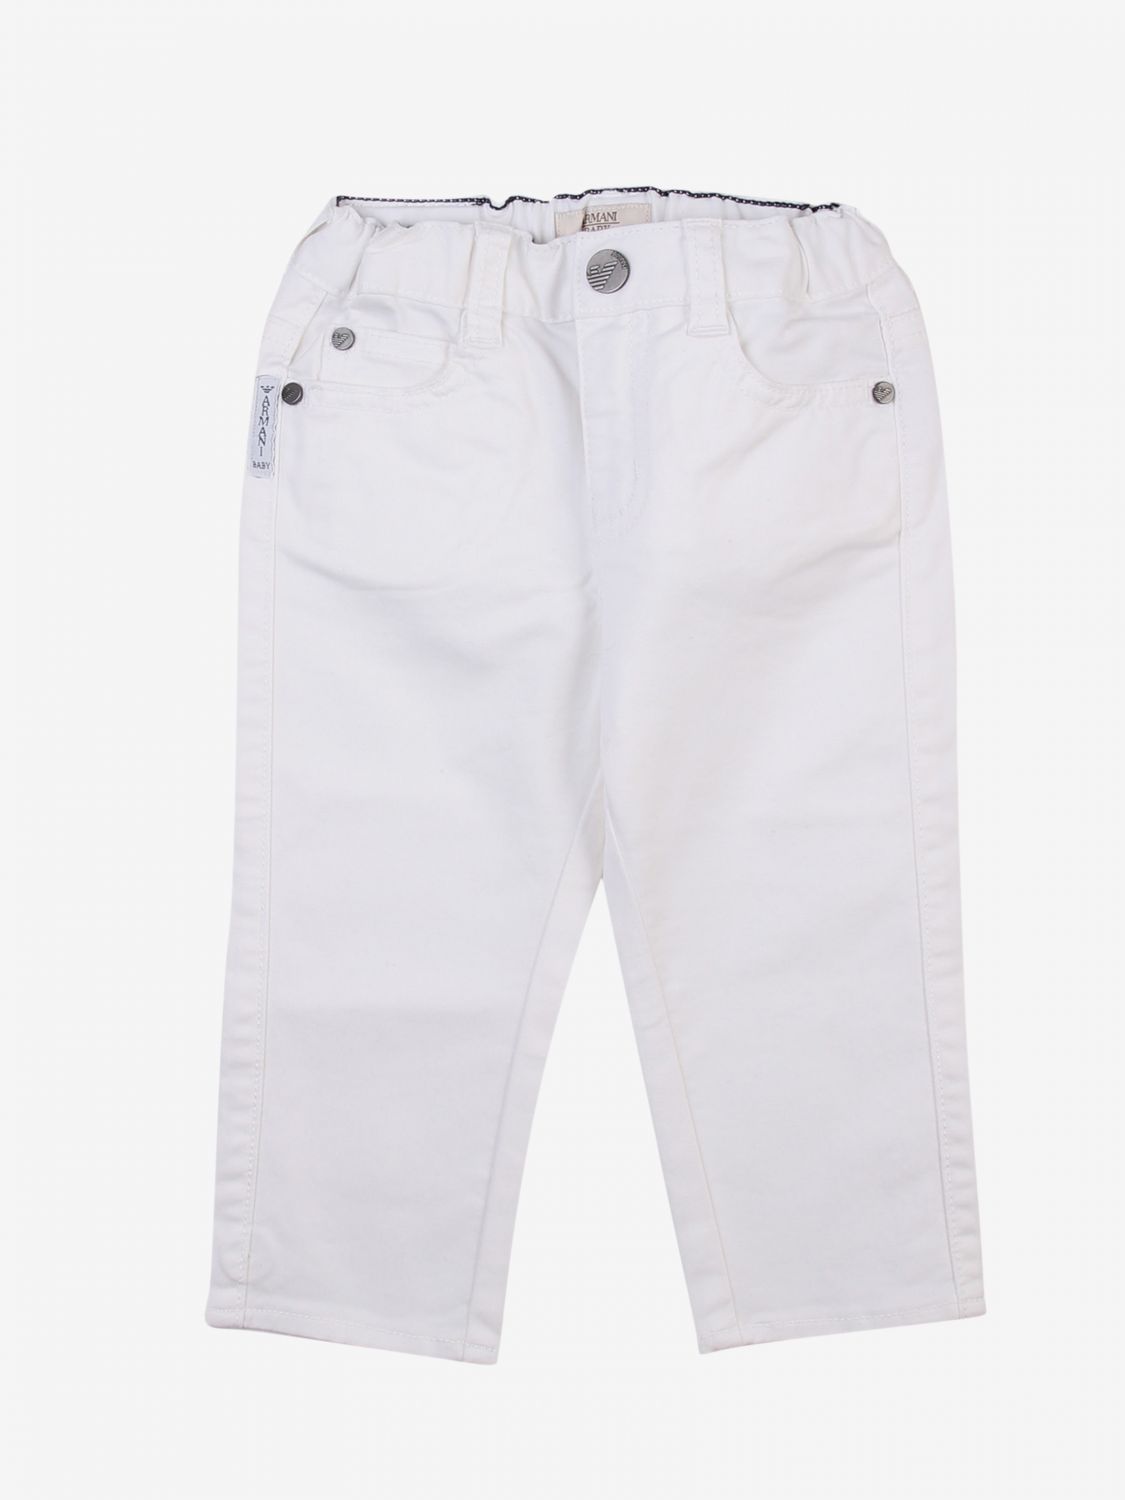 white armani shorts